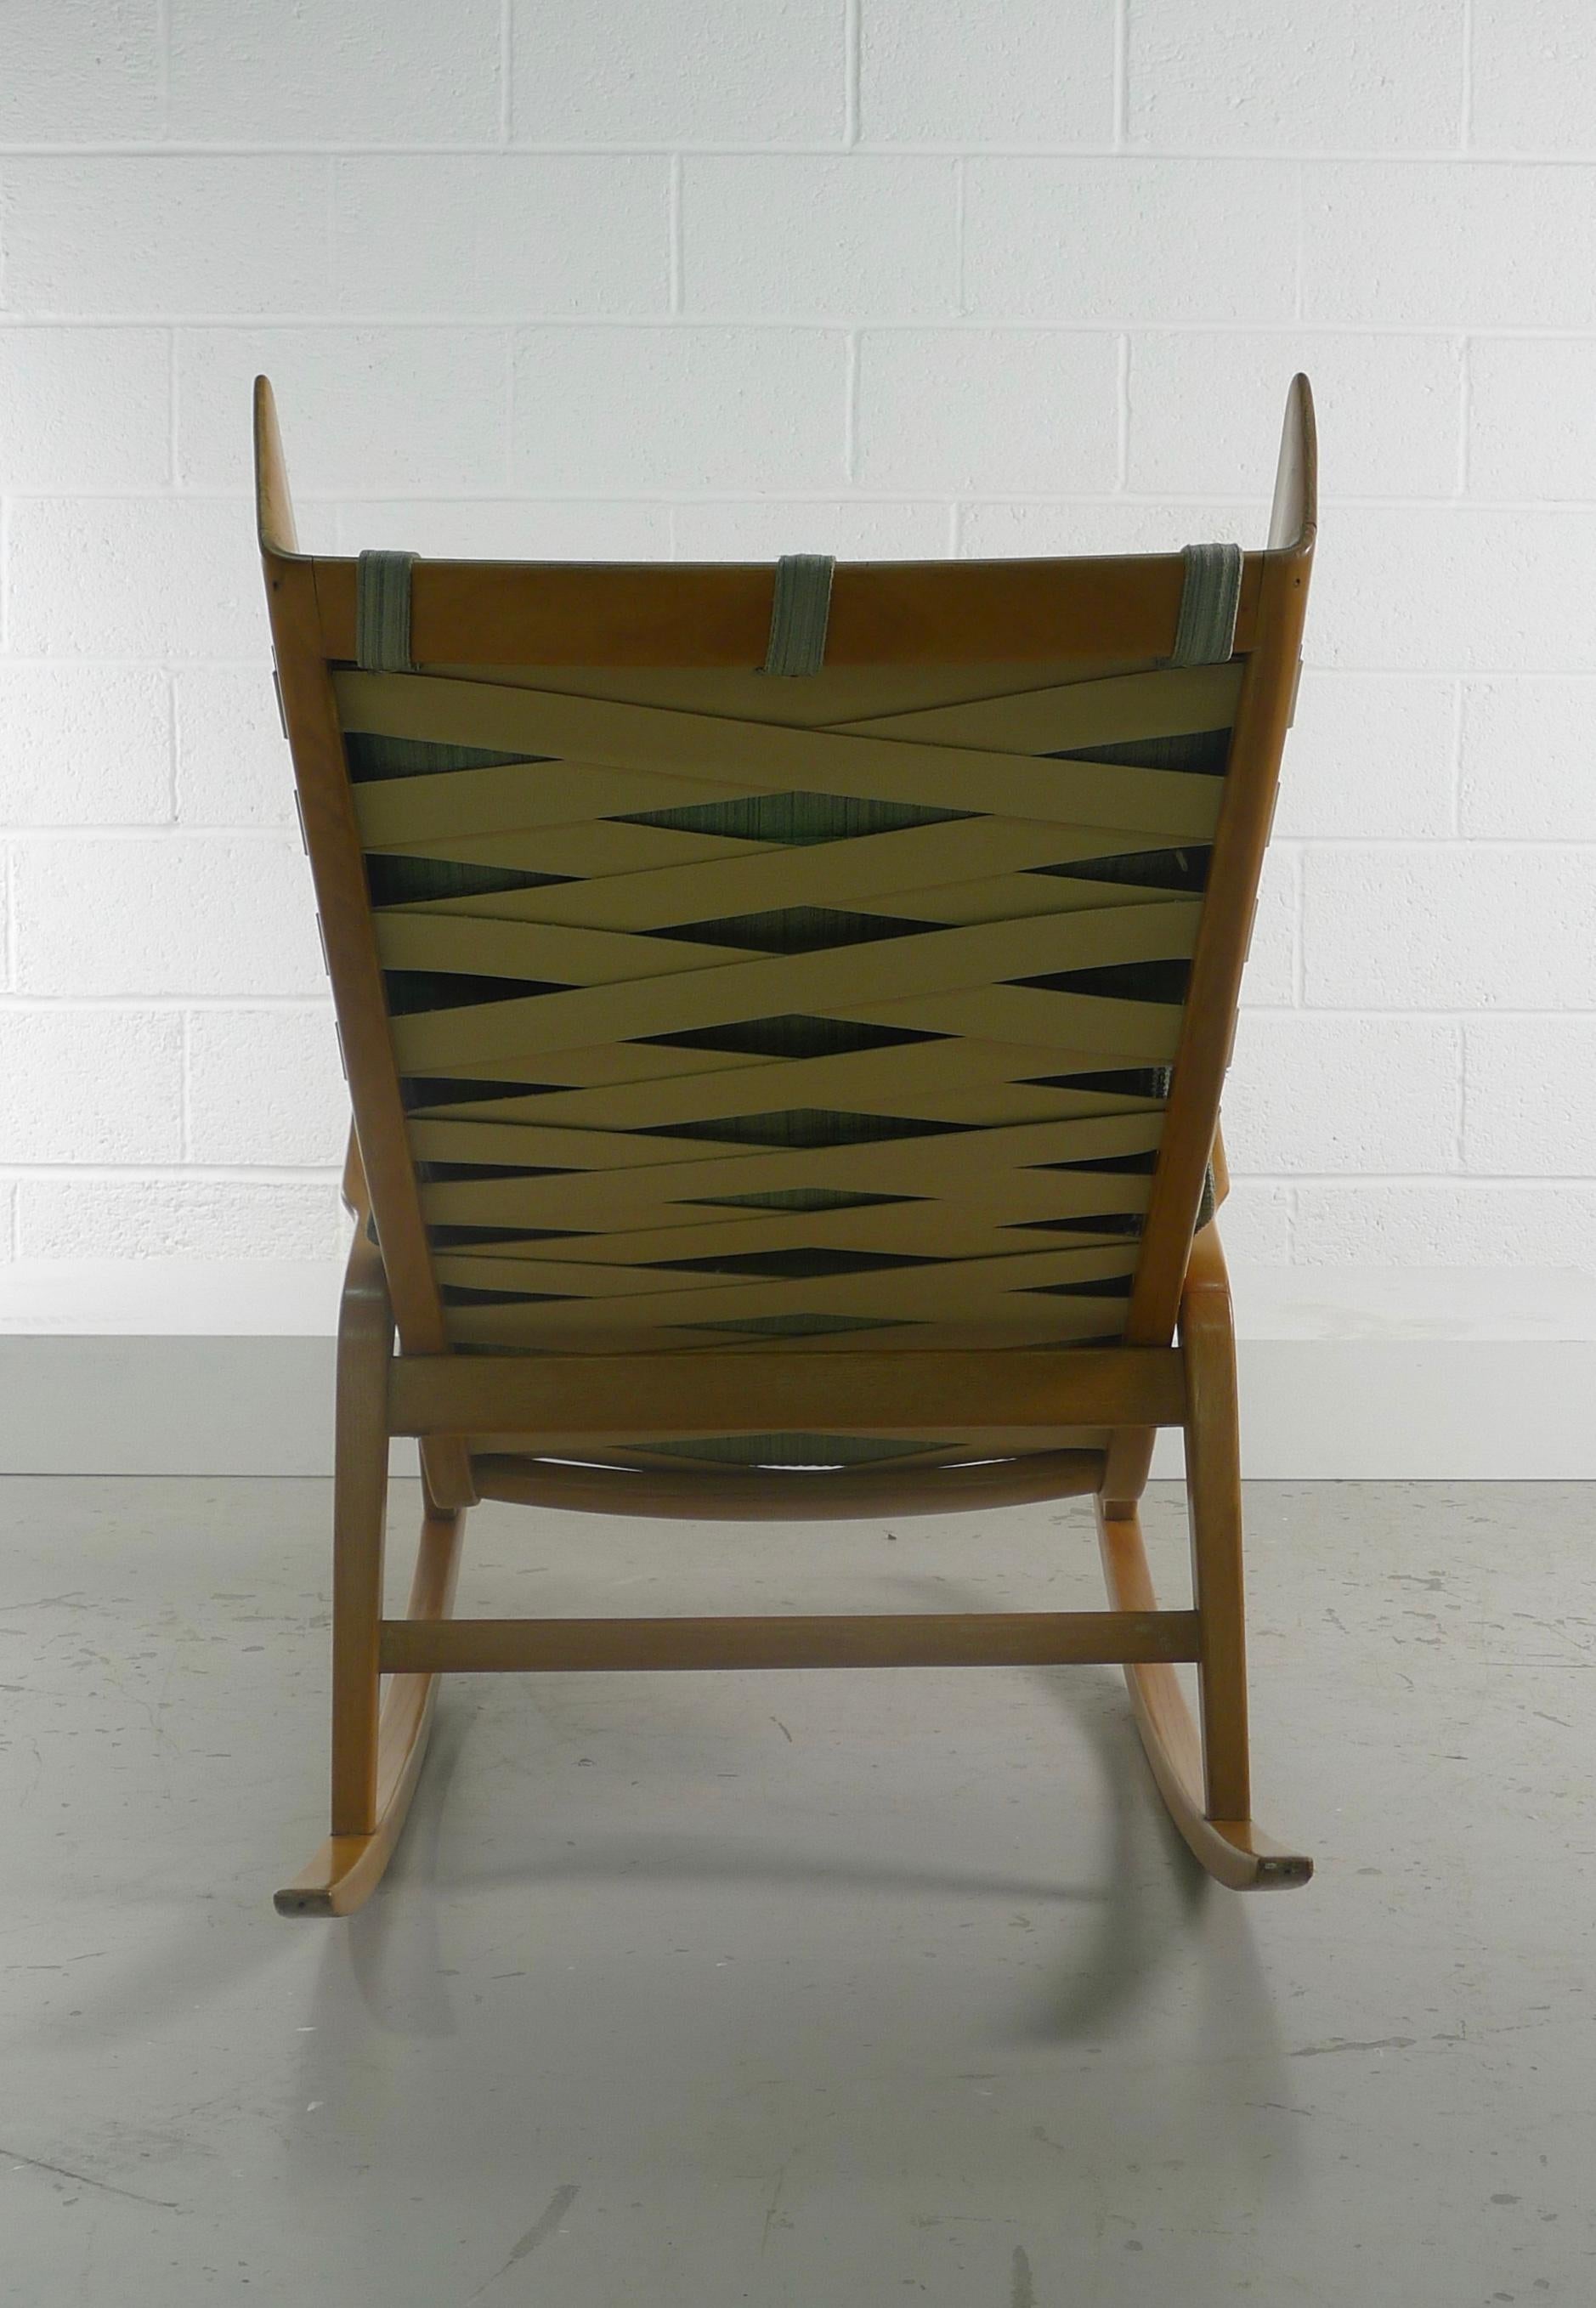 Wood Studio Technica Cassina, Rocking Chair Model 572, circa 1955